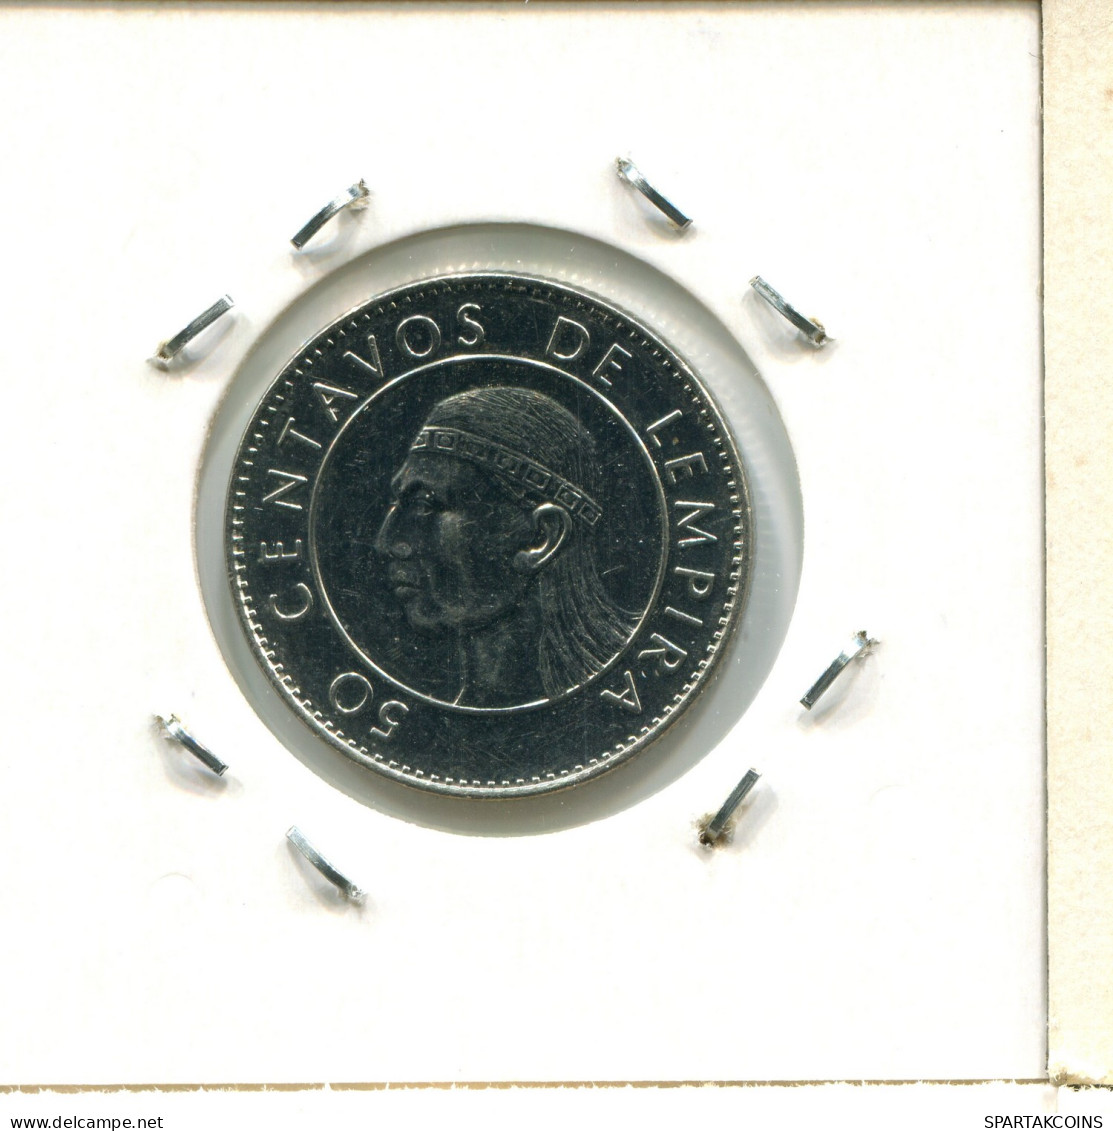 50 CENTAVOS 1994 HONDURAS Moneda #AY188.2.E - Honduras